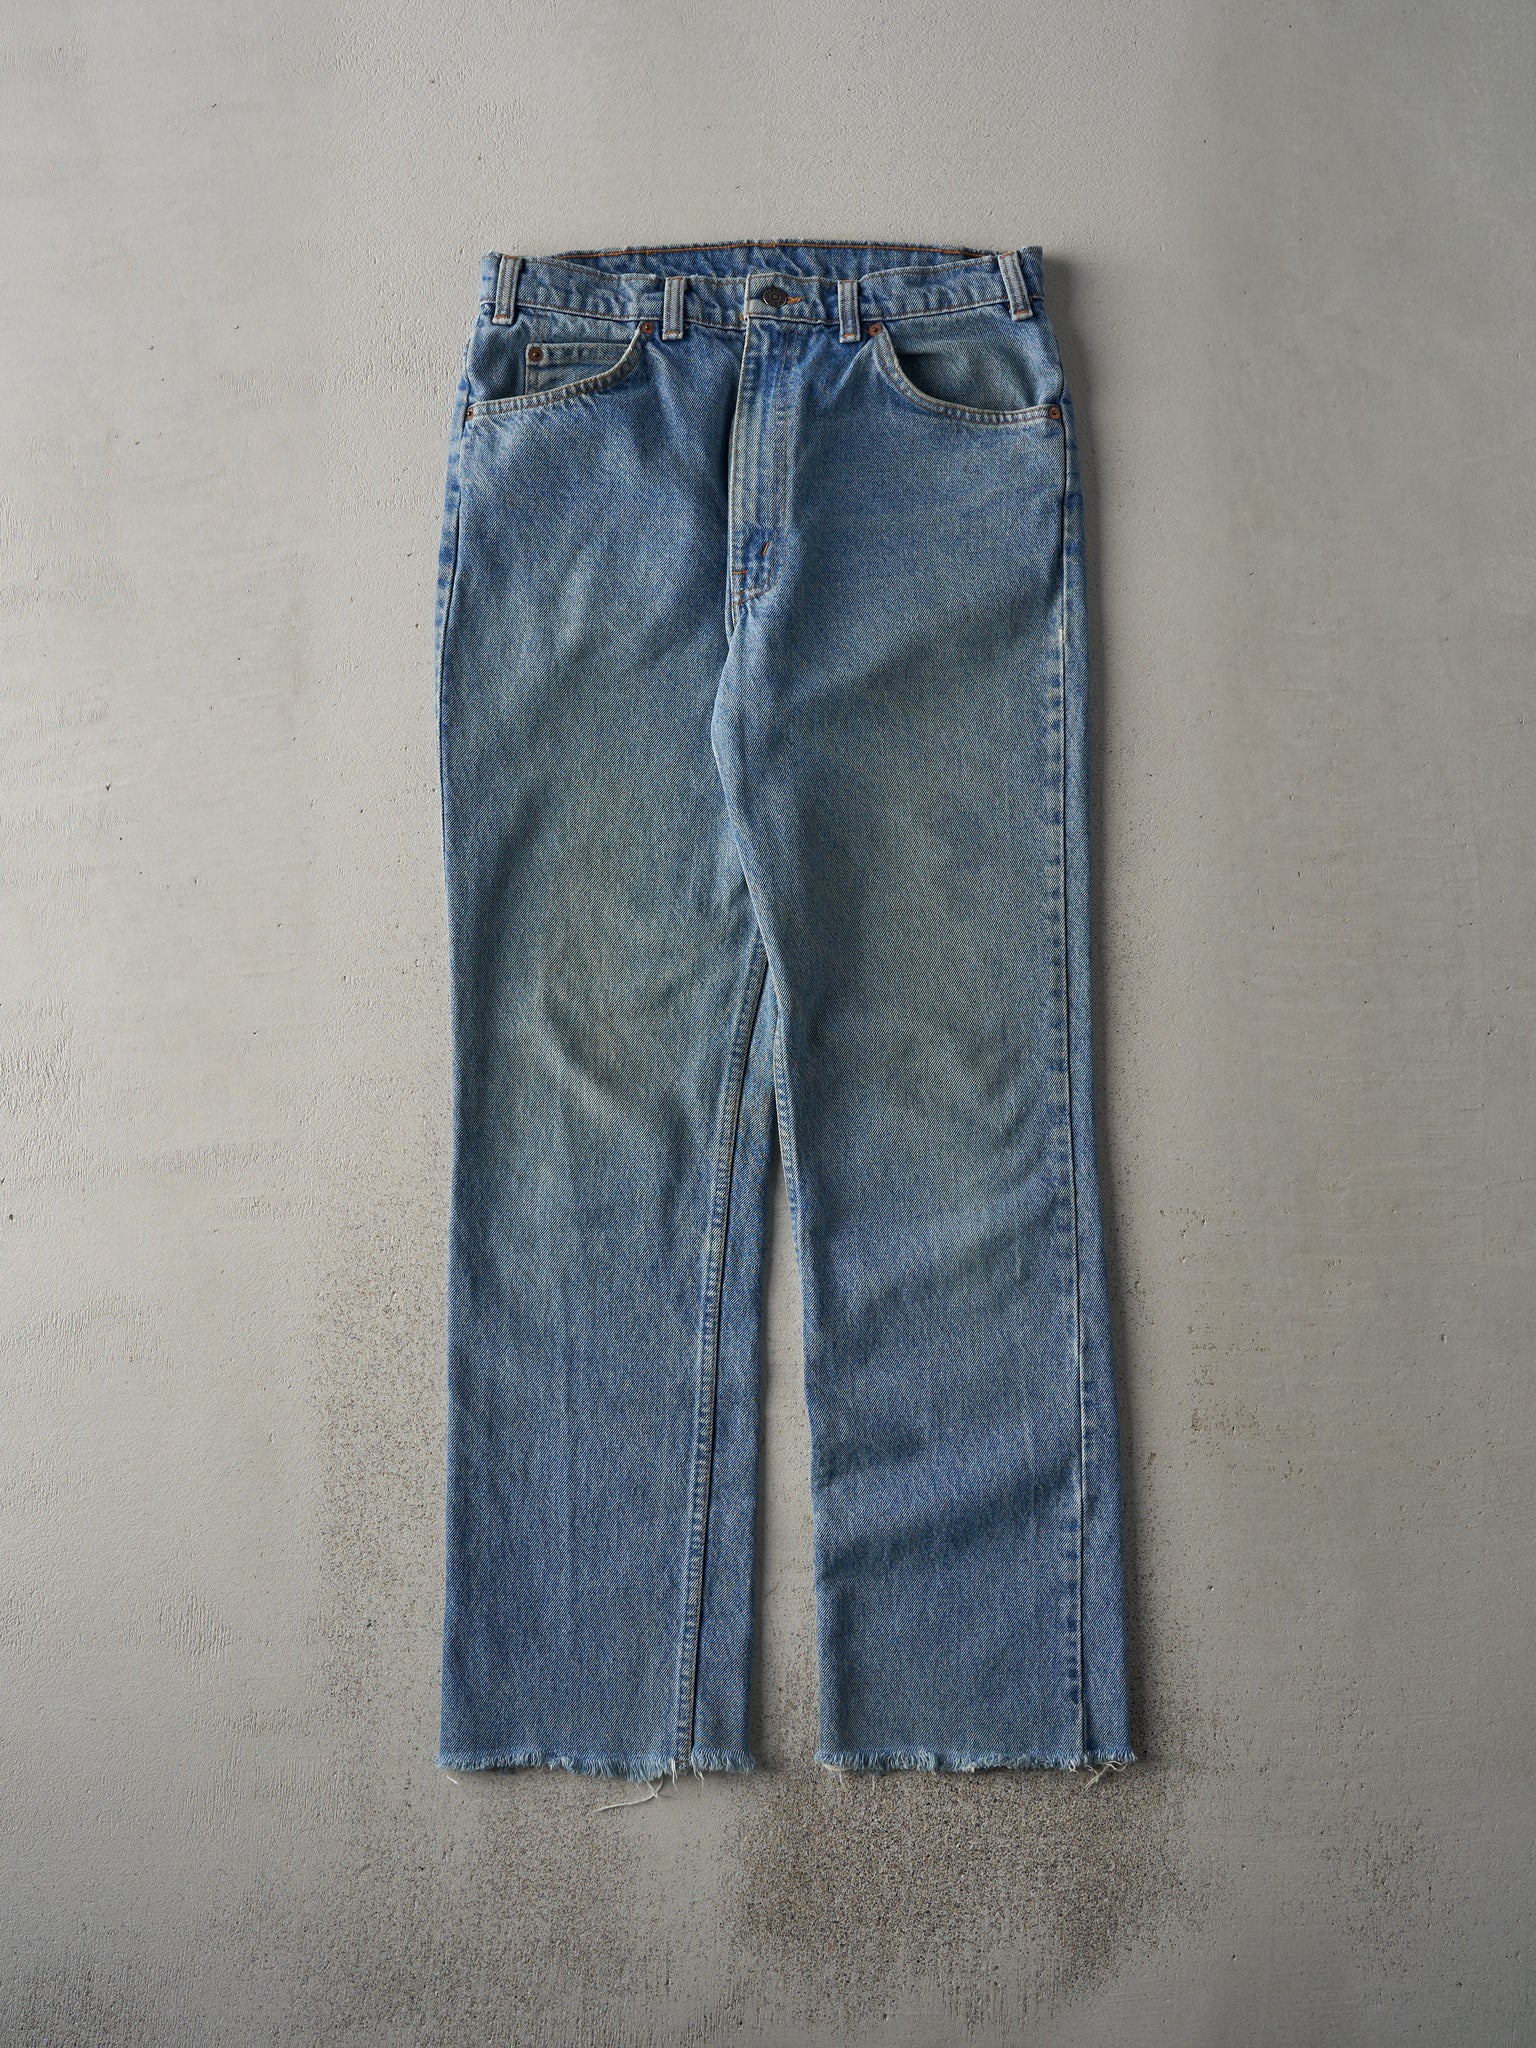 Vintage 70s Light Wash Levi's 619 Orange Tab Jeans (32x30.5)